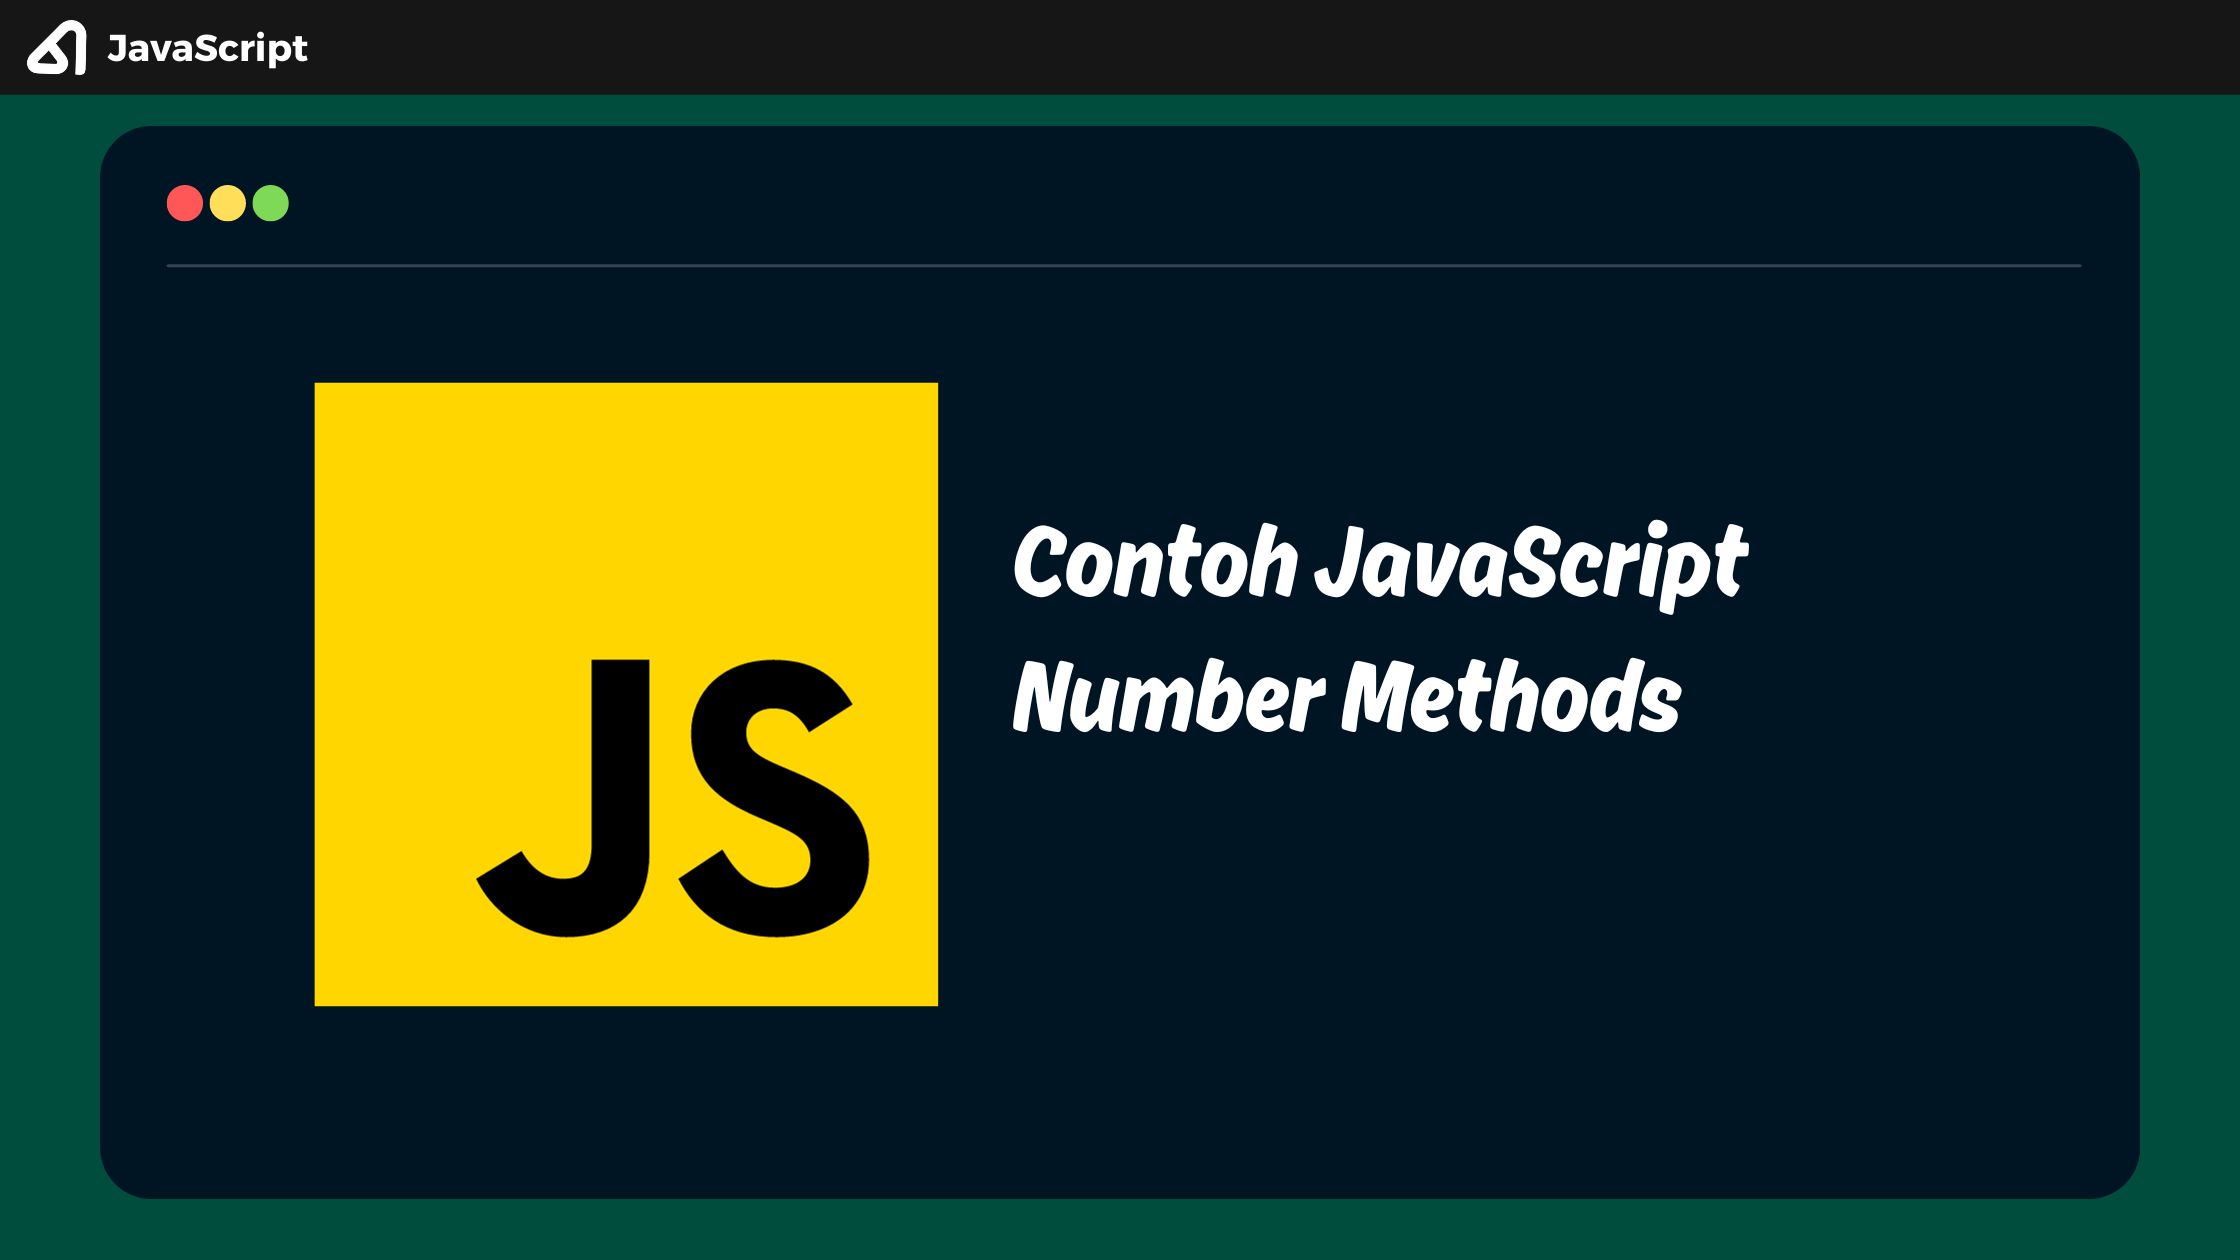 Contoh JavaScript Number Methods